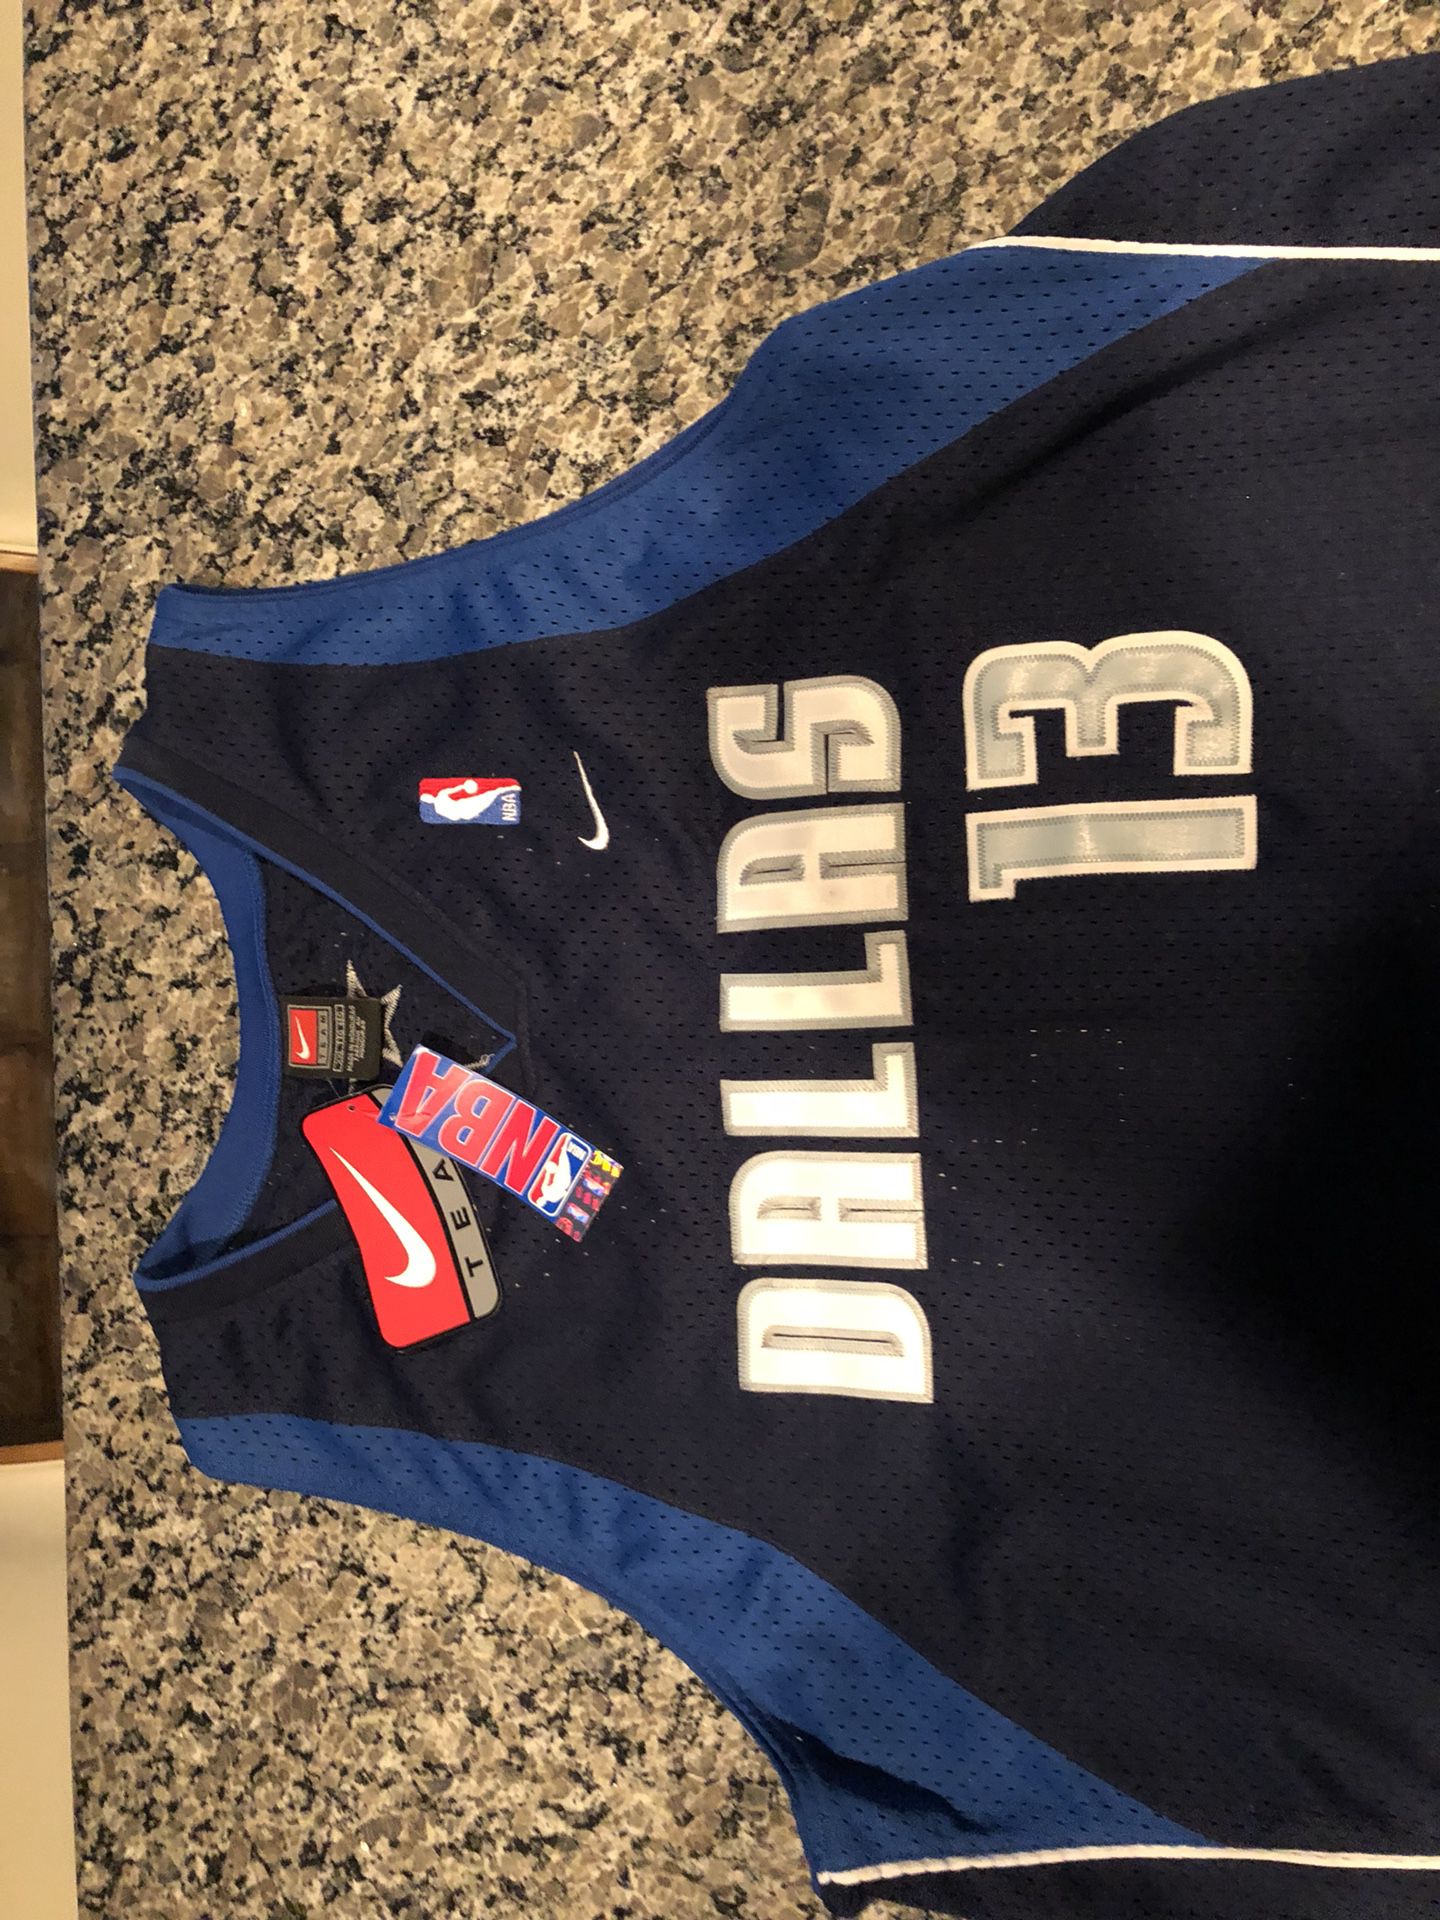 Steve Nash official nba Dallas Mavericks jersey autographed for